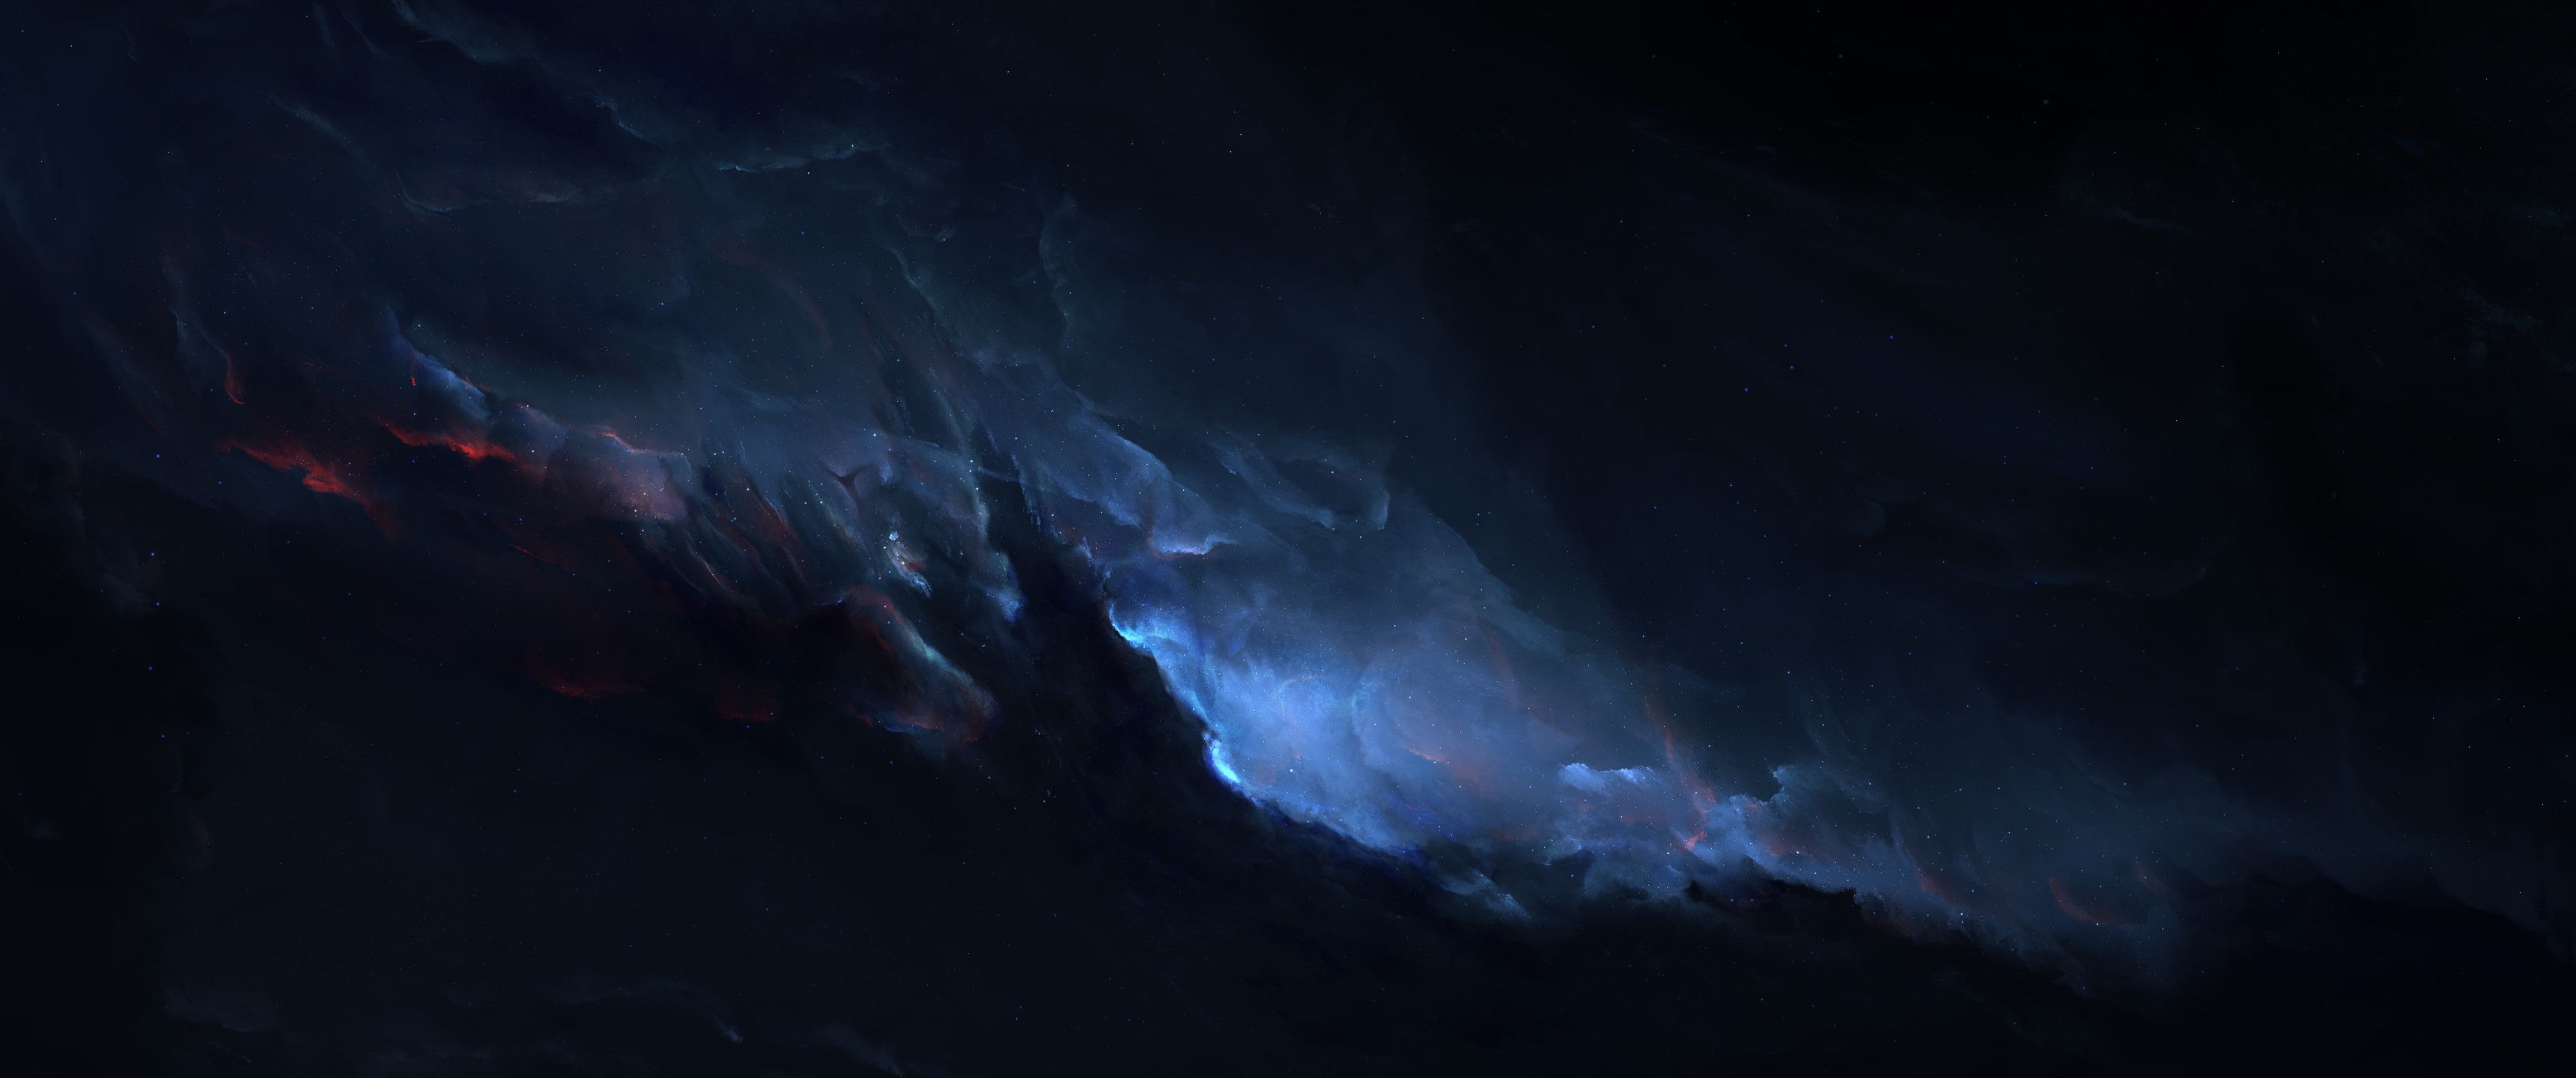 Wallpaper 4k, space, nebula, stars, clouds, dark, abstract, background - 3440x1440